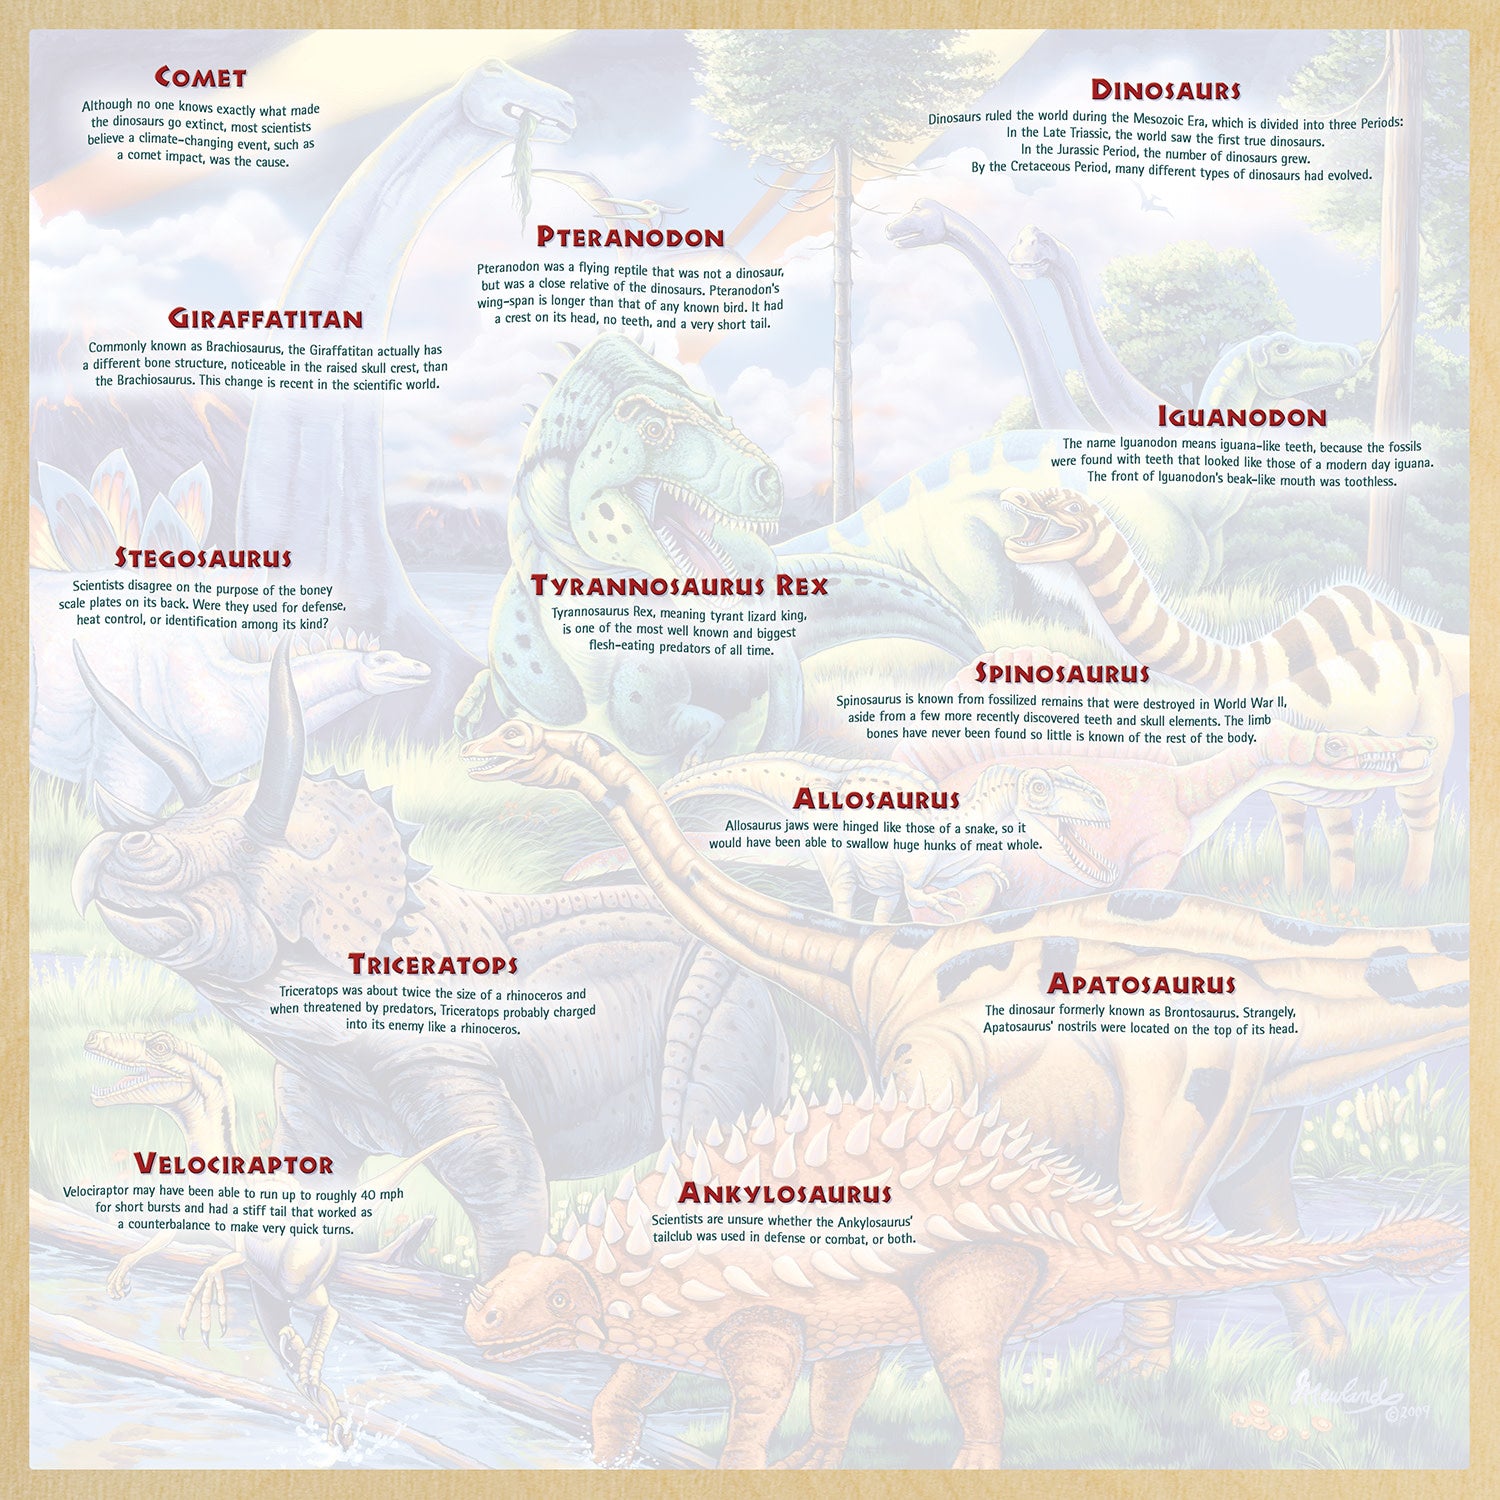 Wood Fun Facts - Dinosaur Friends 48 Piece Wood Jigsaw Puzzle